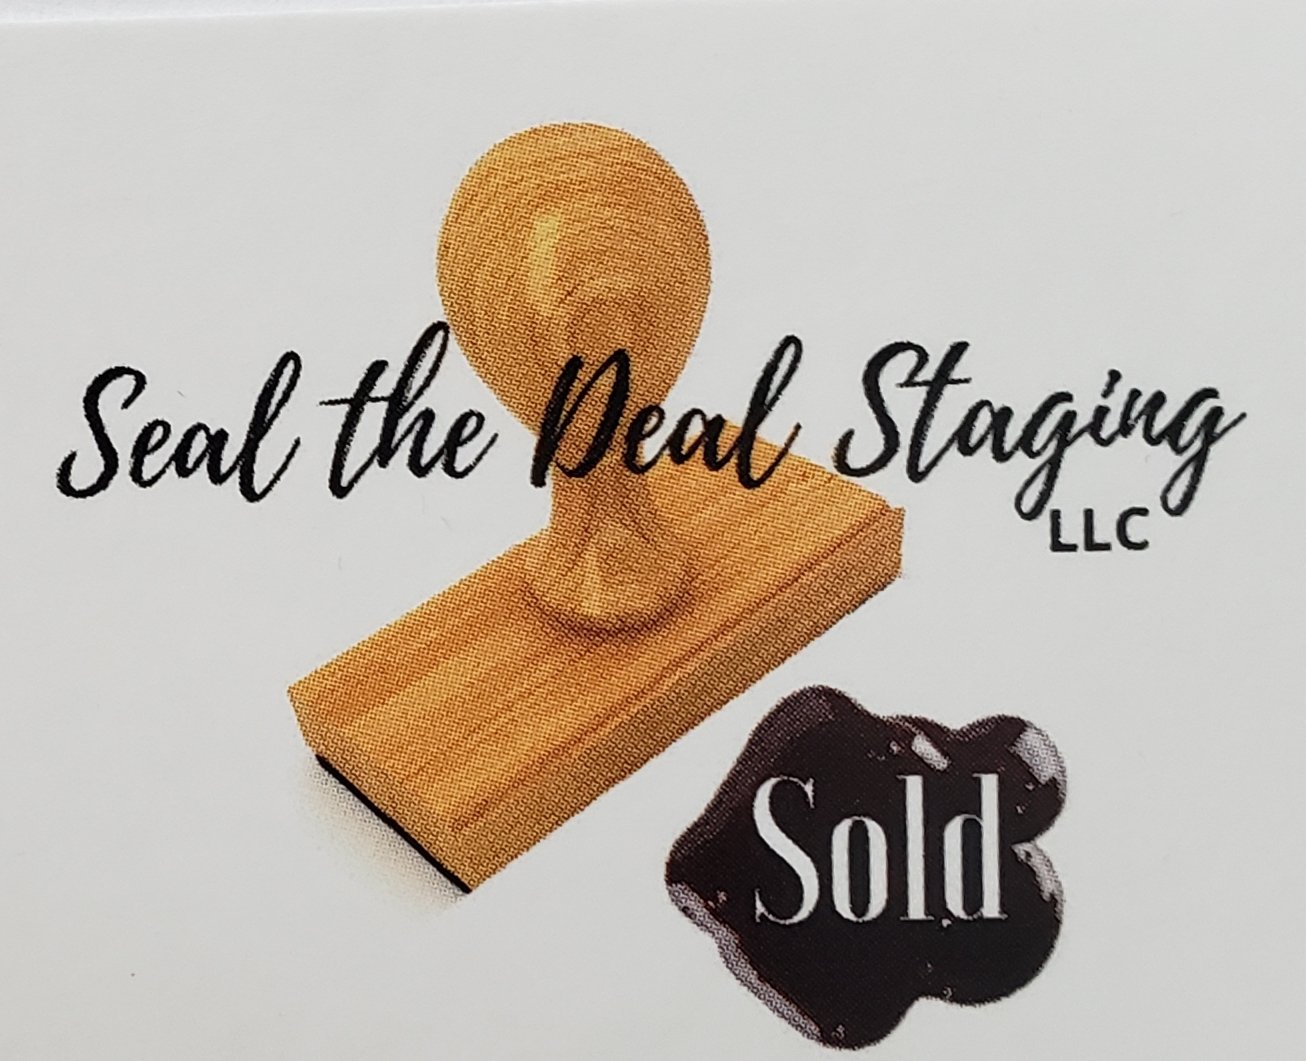 Debbie Volstromer, Seal the Deal Staging LLC